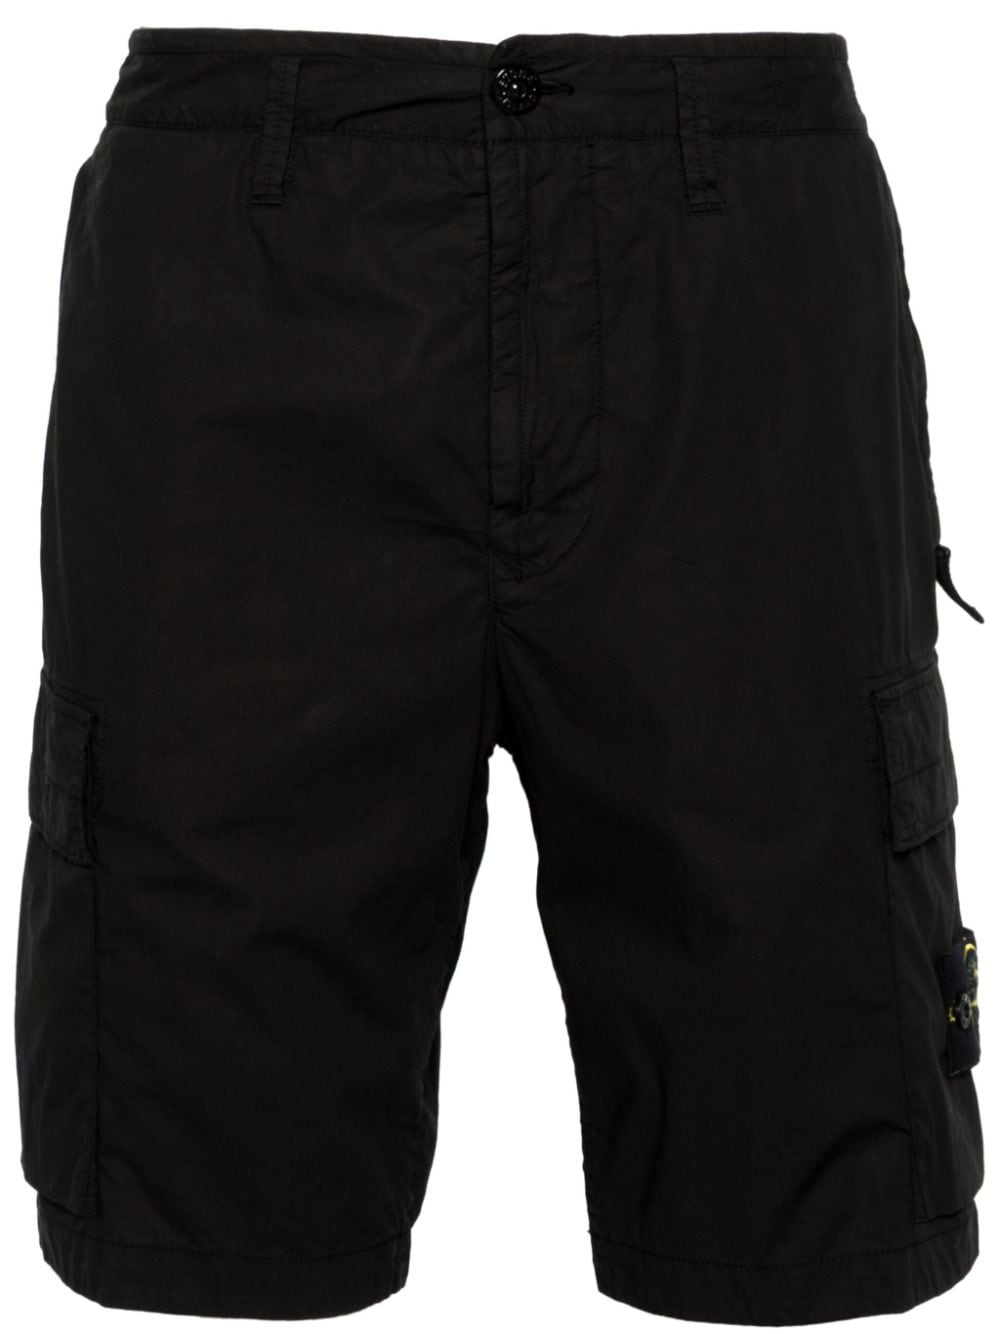 Shorts with pocket